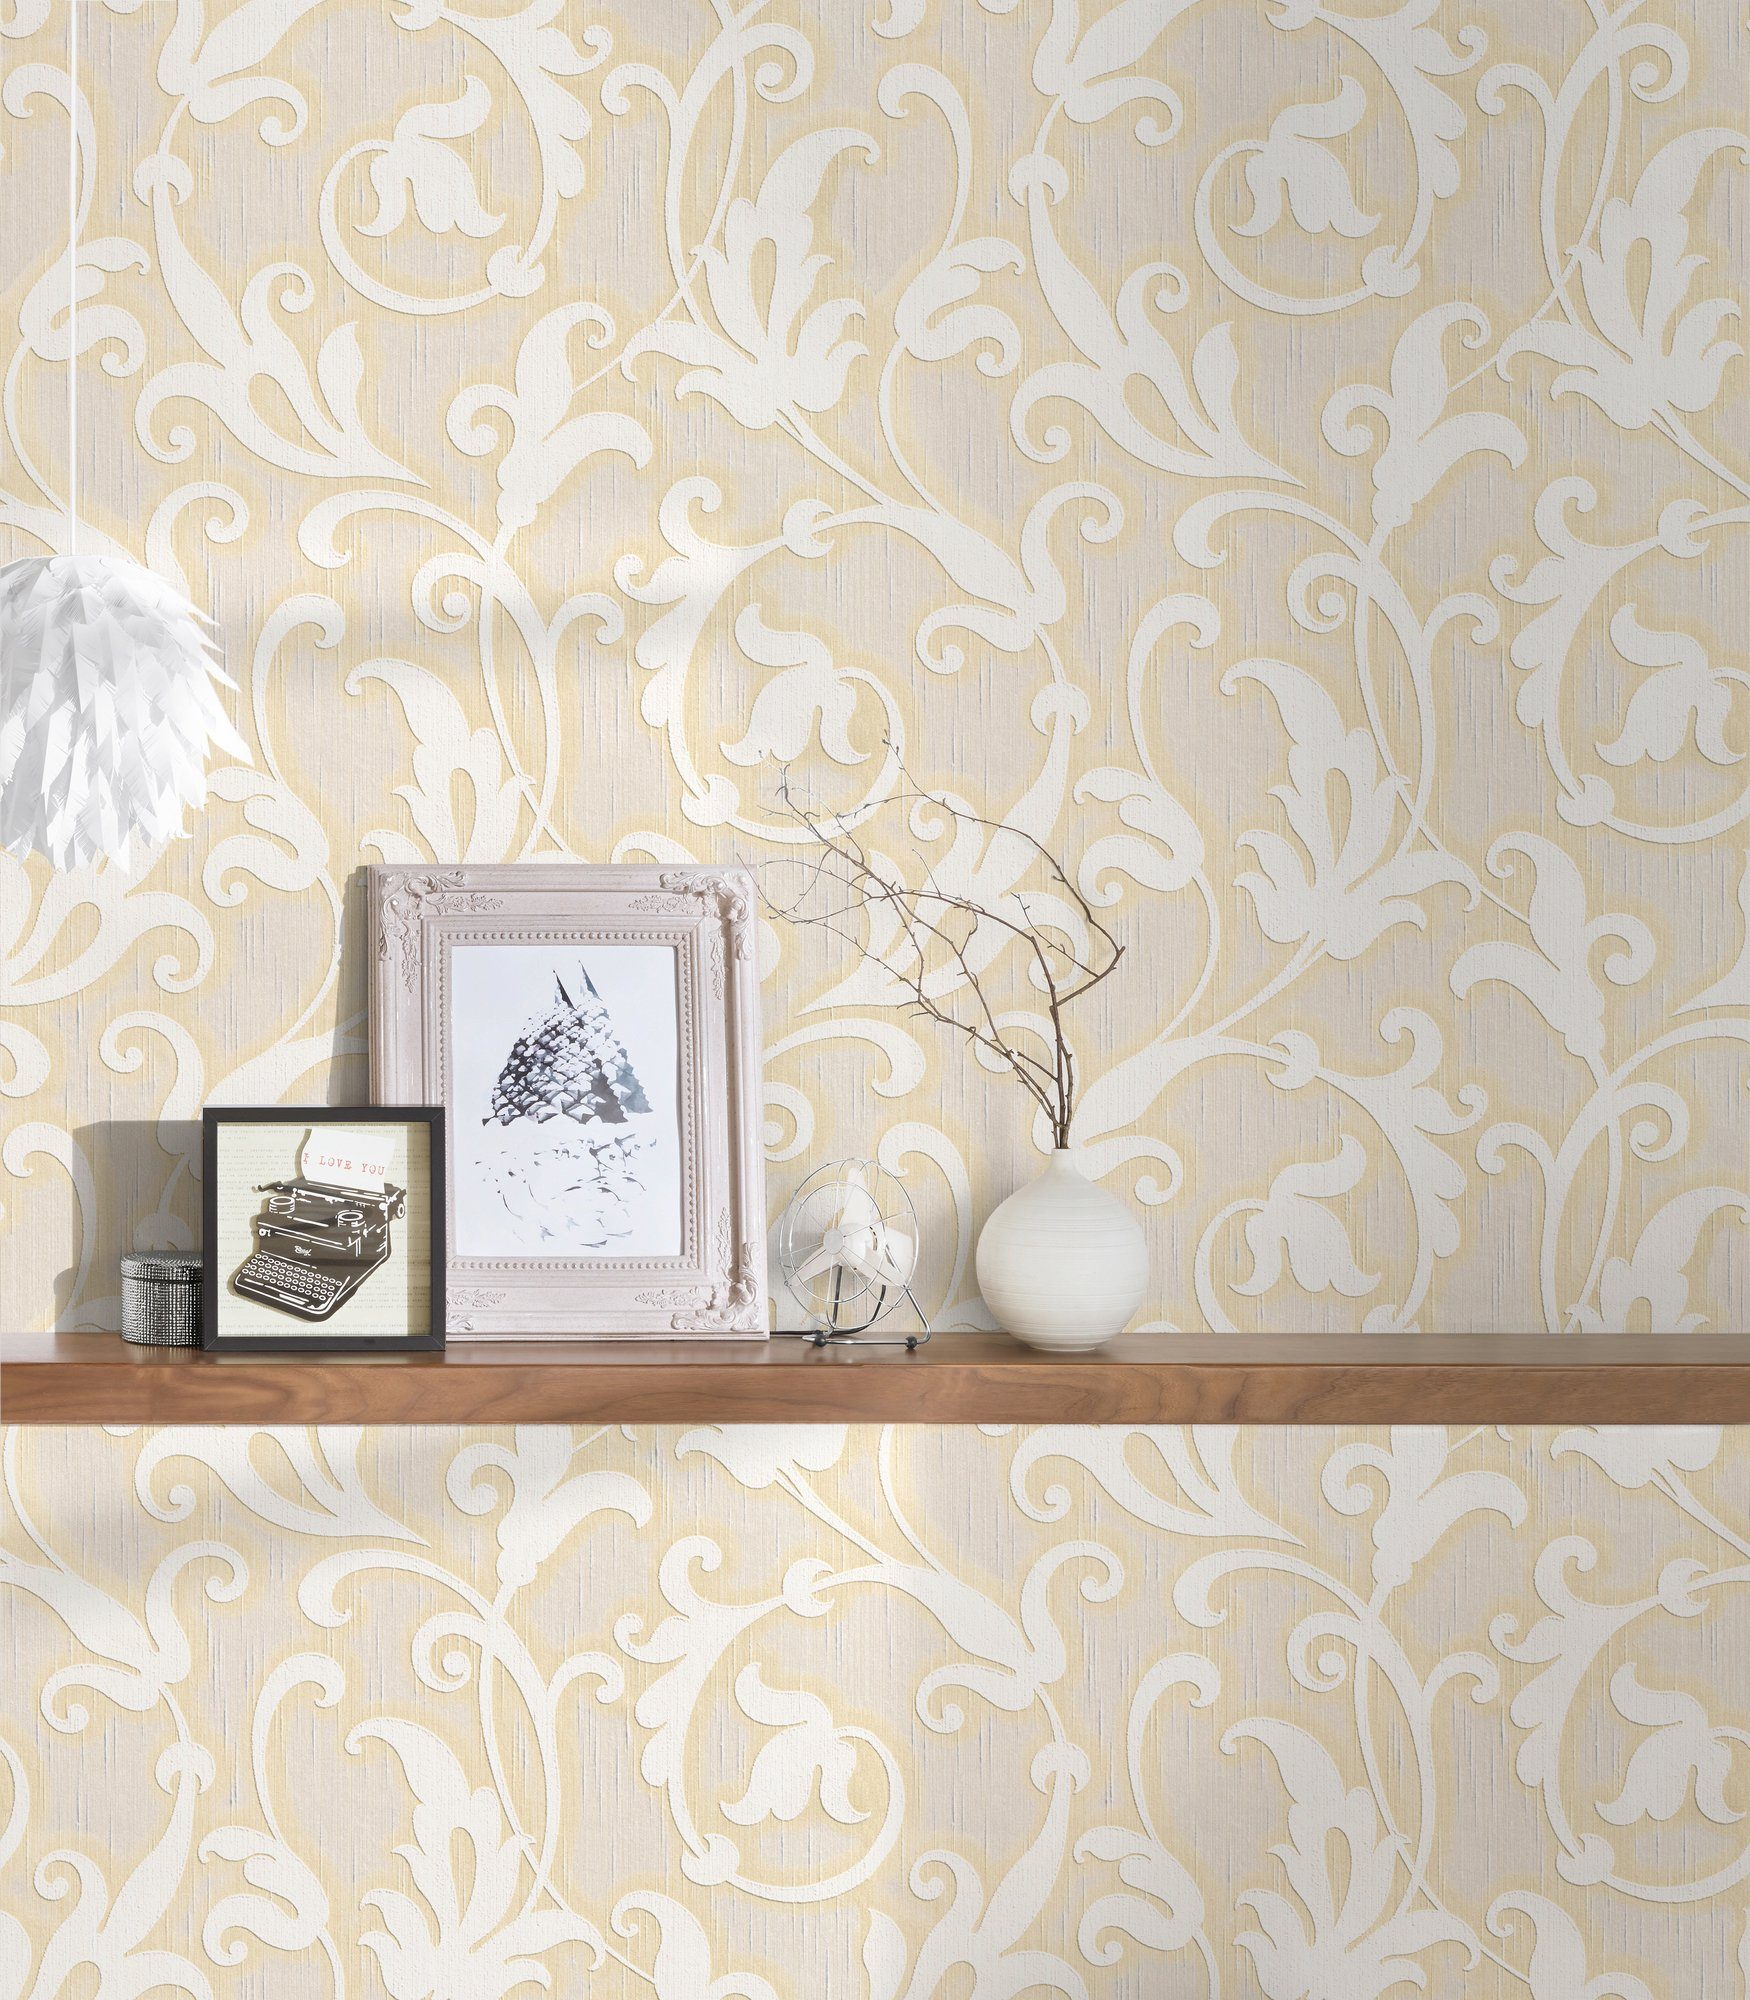 Tessuto, Paper samtig, Textiltapete Barock, Architects Barock floral, Tapete creme/beige/gold